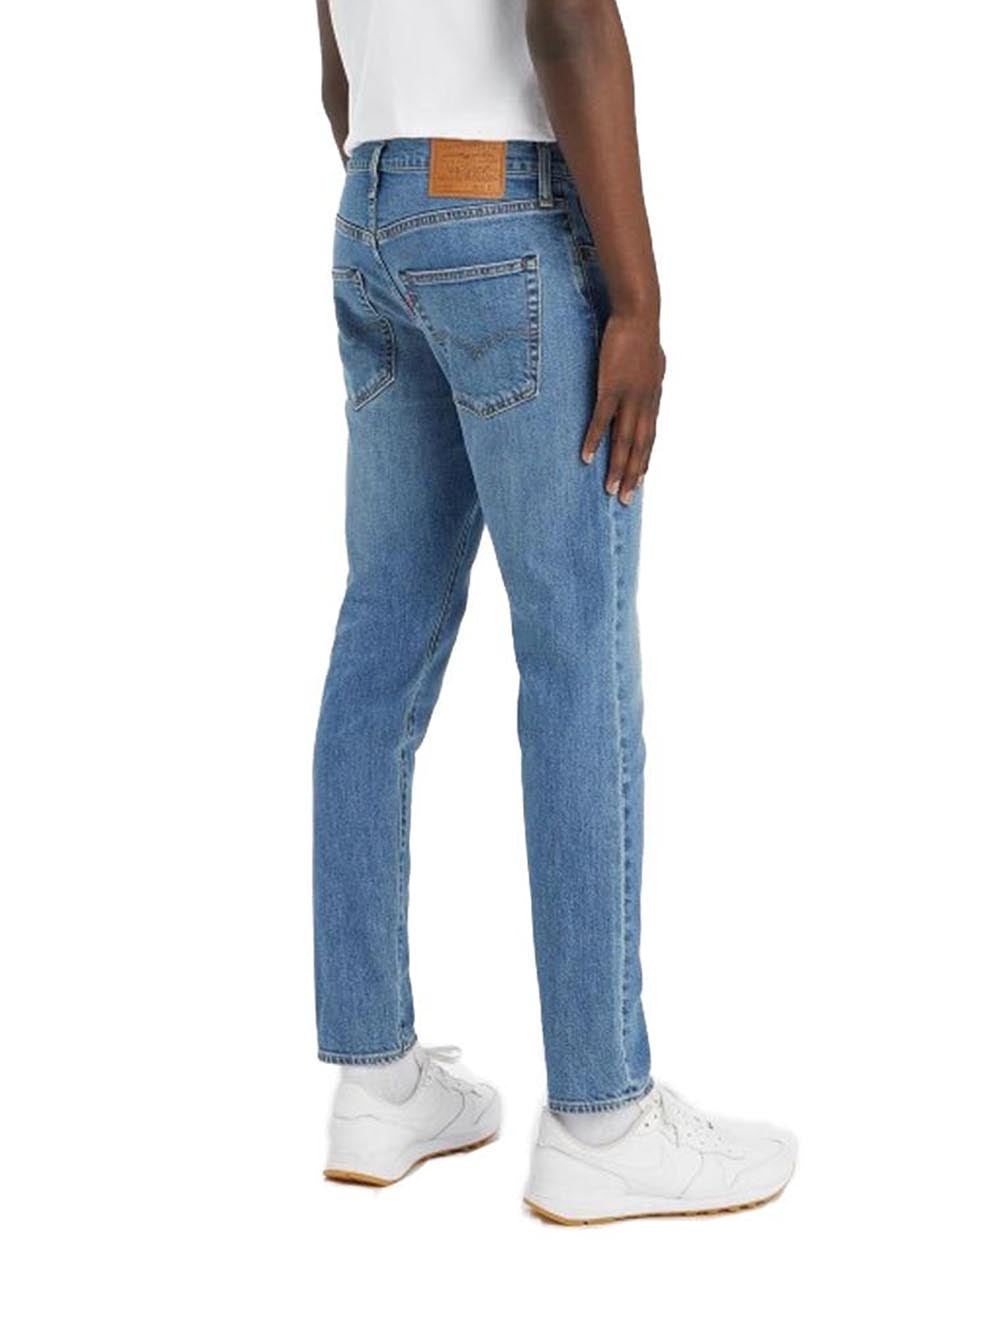 Levi's Jeans Uomo 512 Slim Taper 28833 Medio